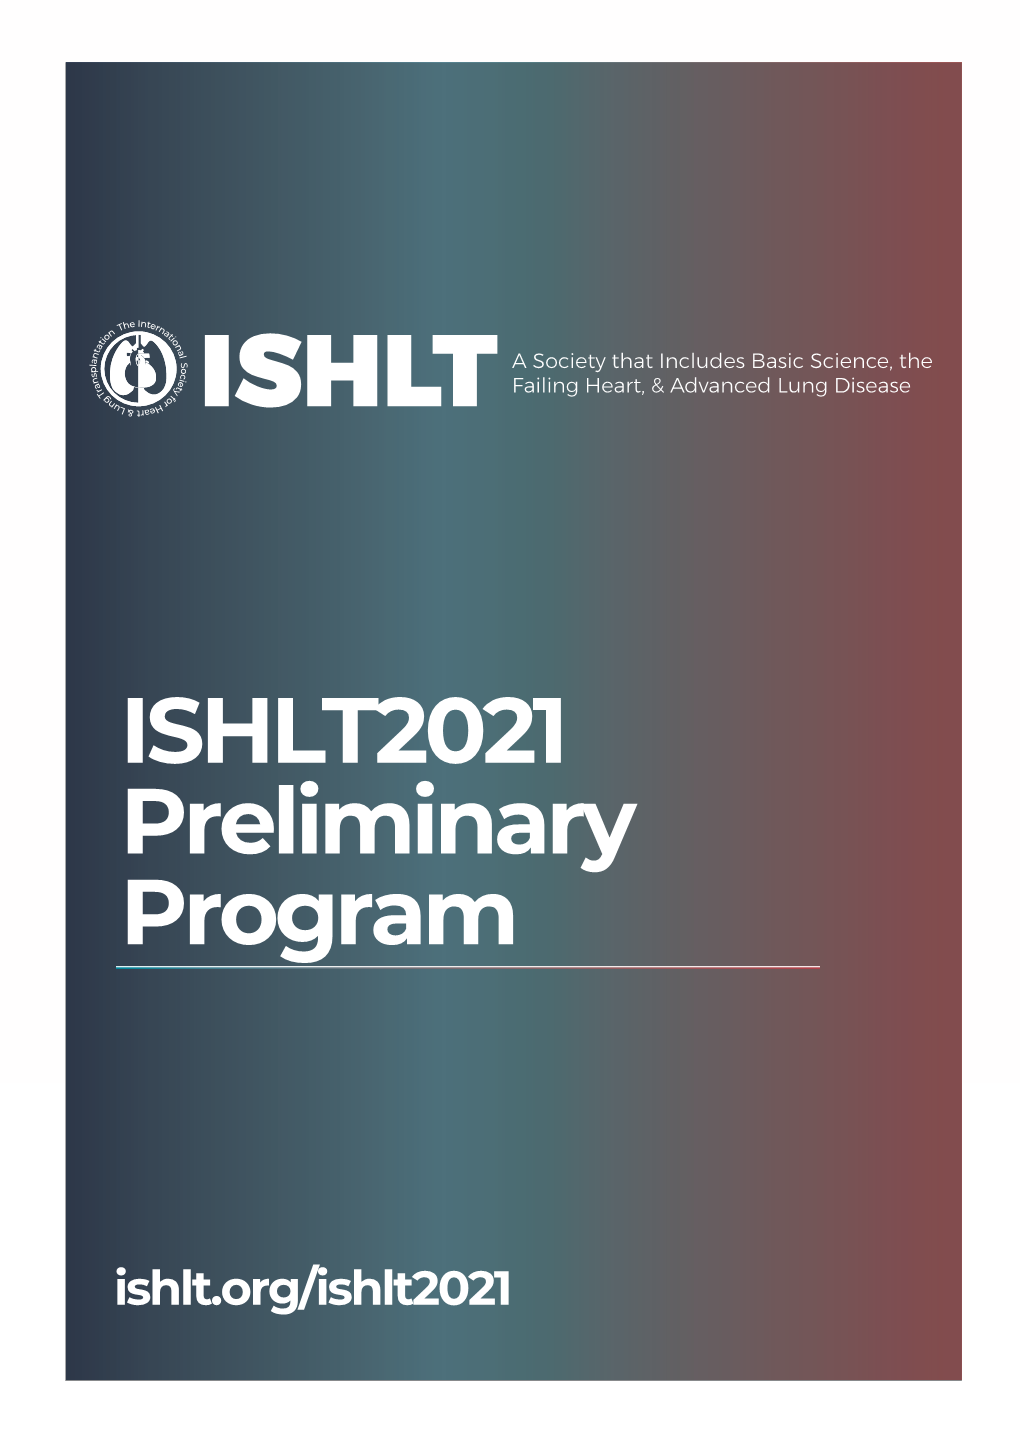 ISHLT2021 Preliminary Program